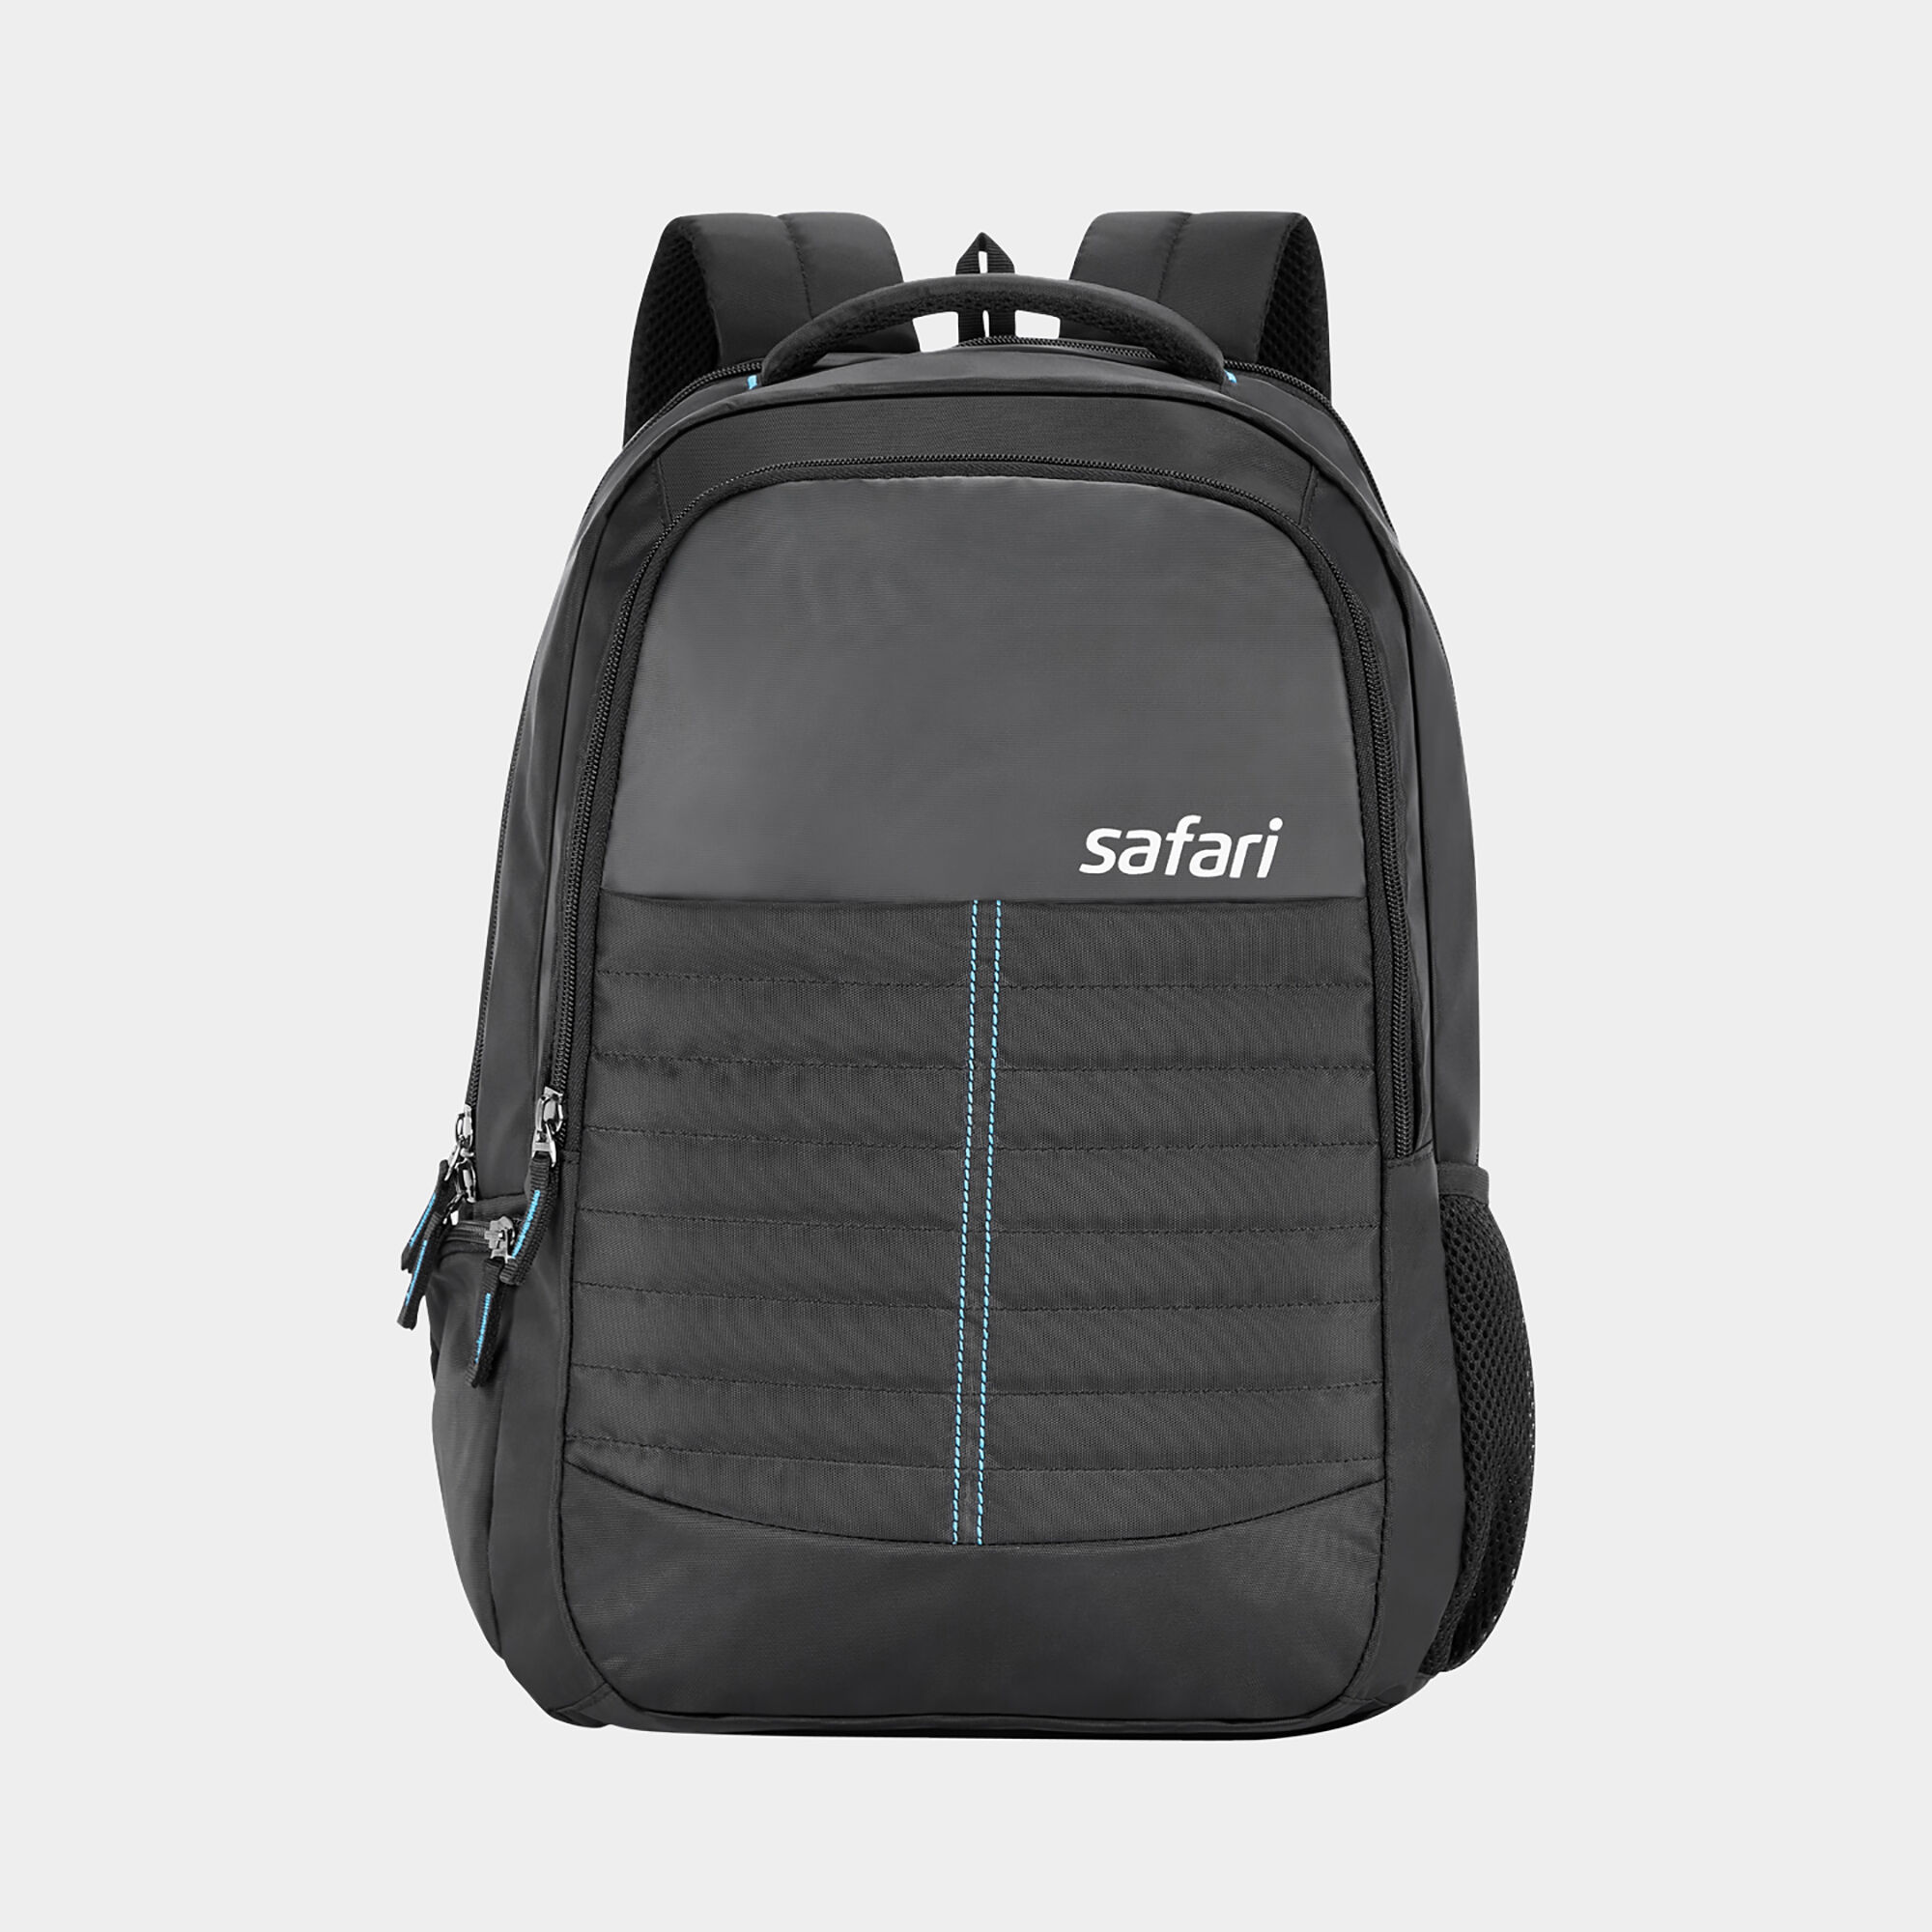 Safari Bags partners with Ogilvy Mumbai to launch new campaign